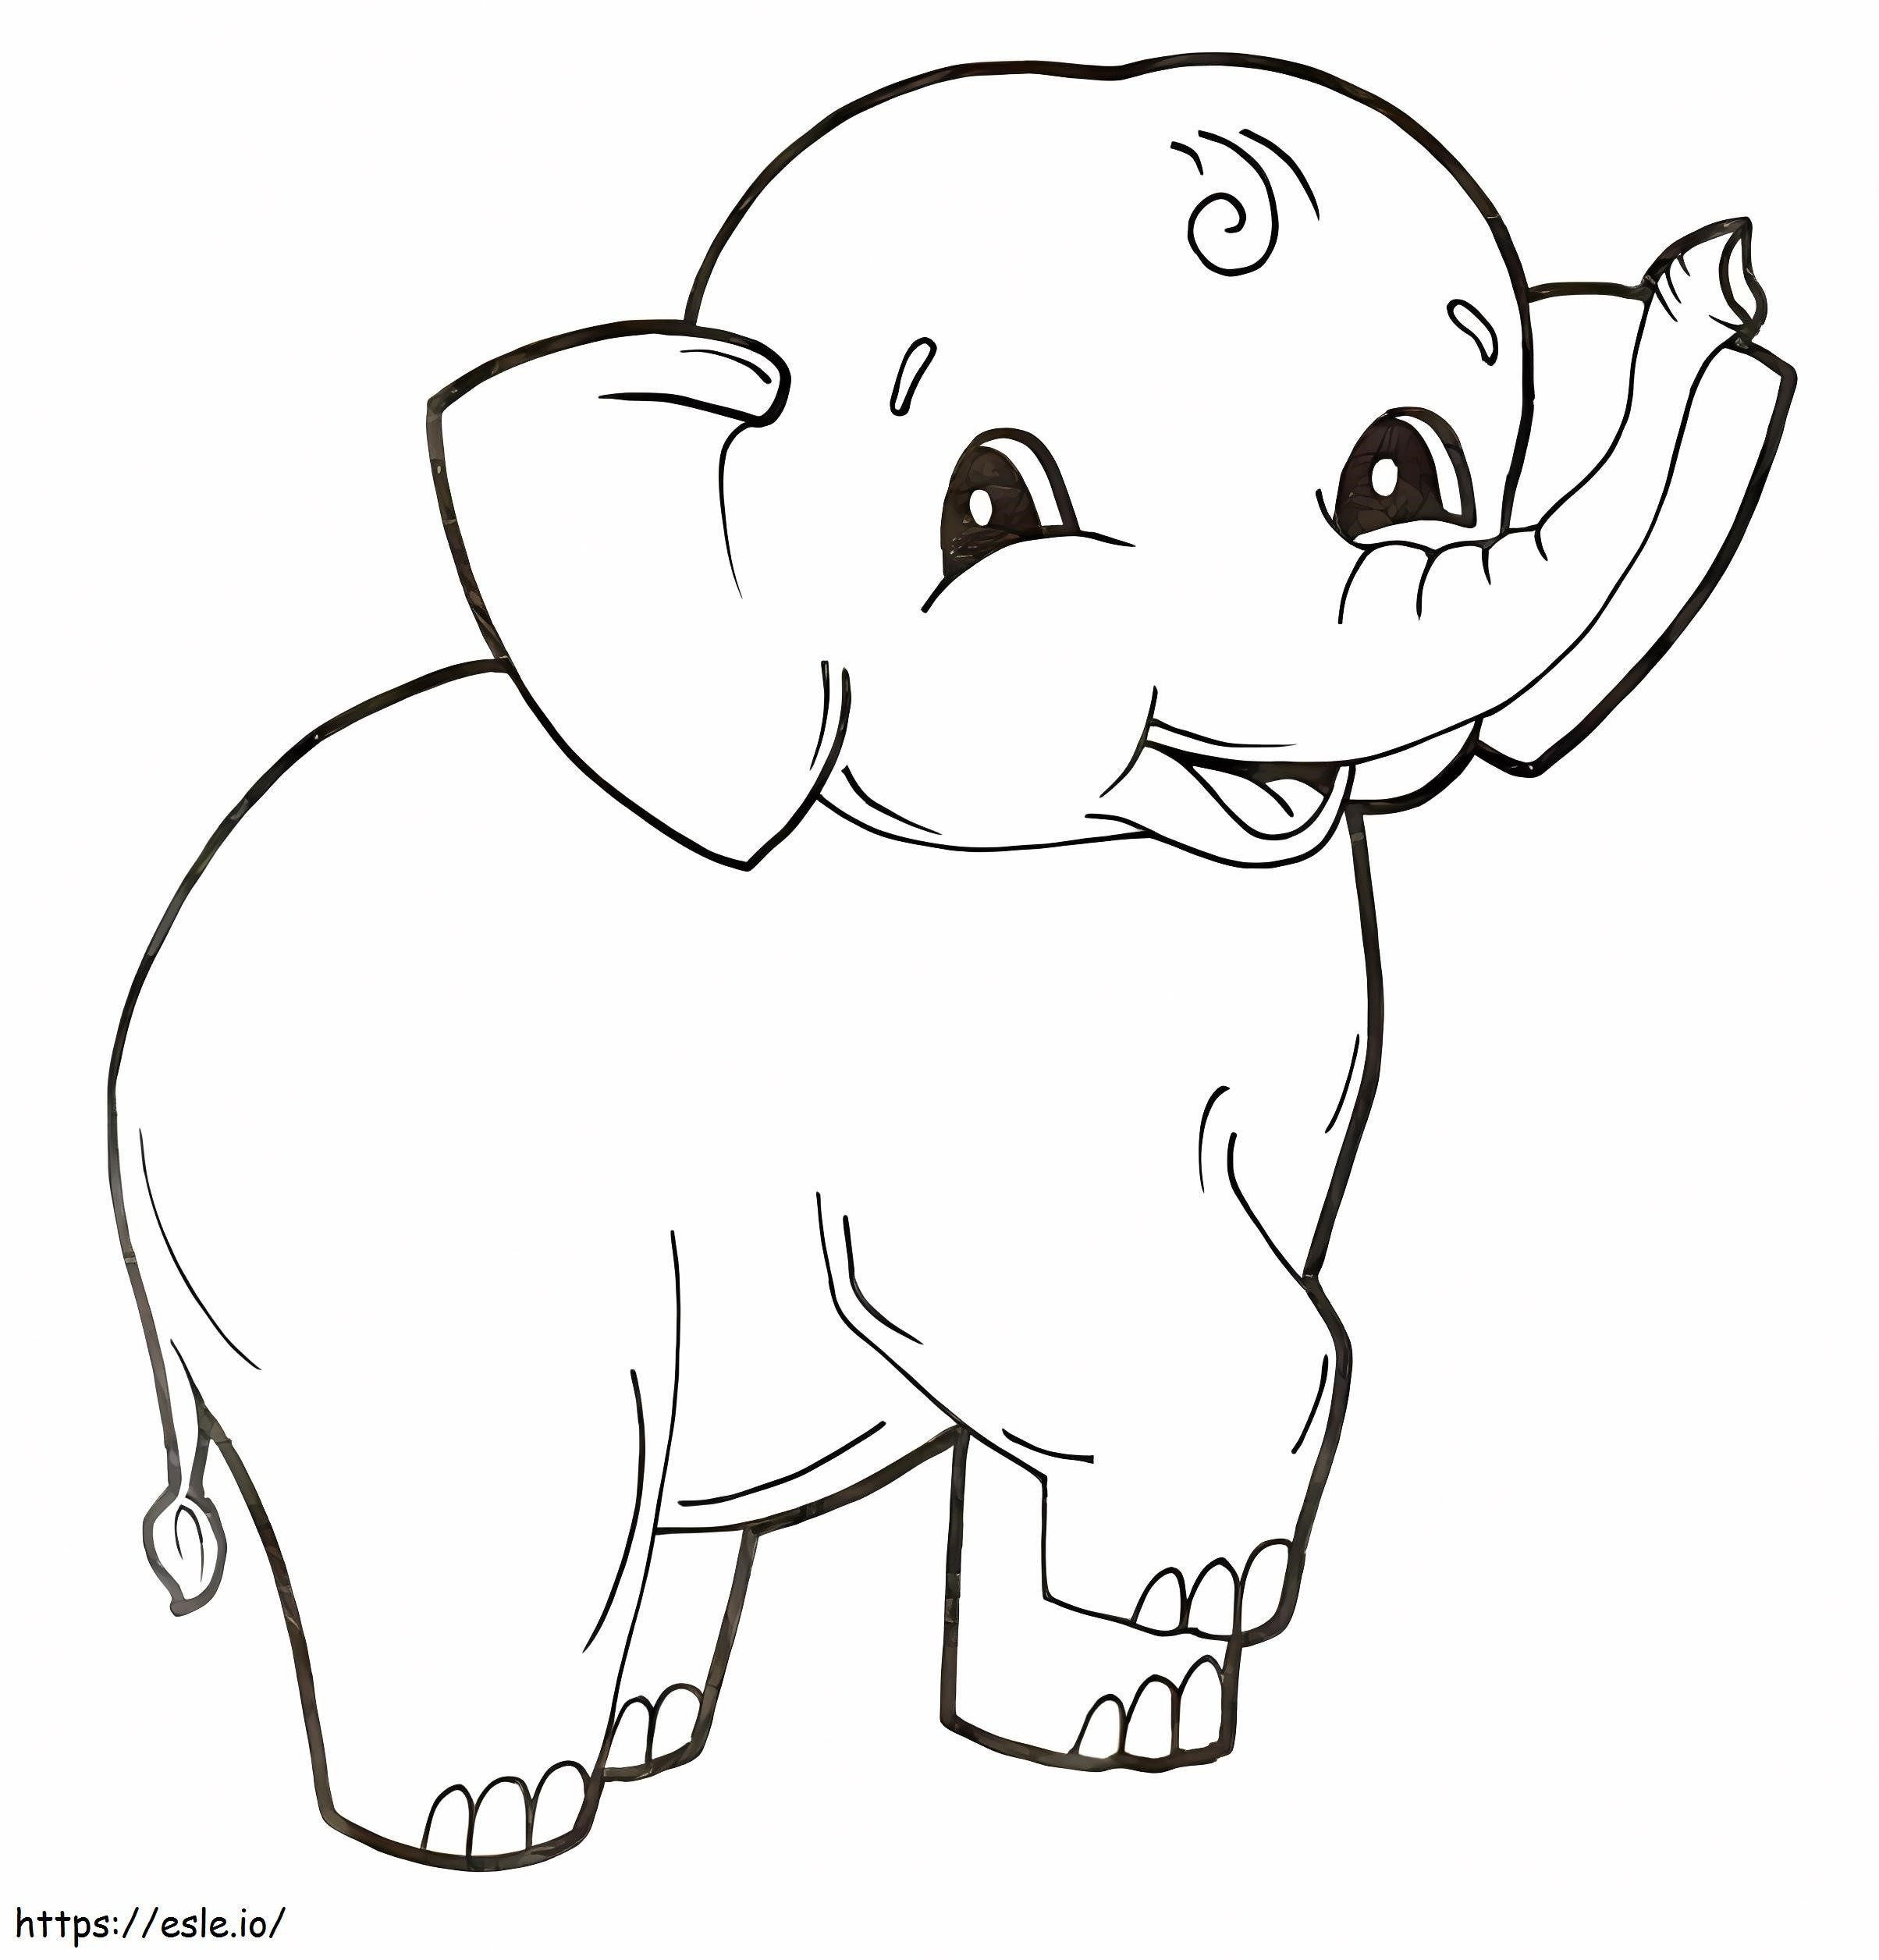 Elephanteau ausmalbilder